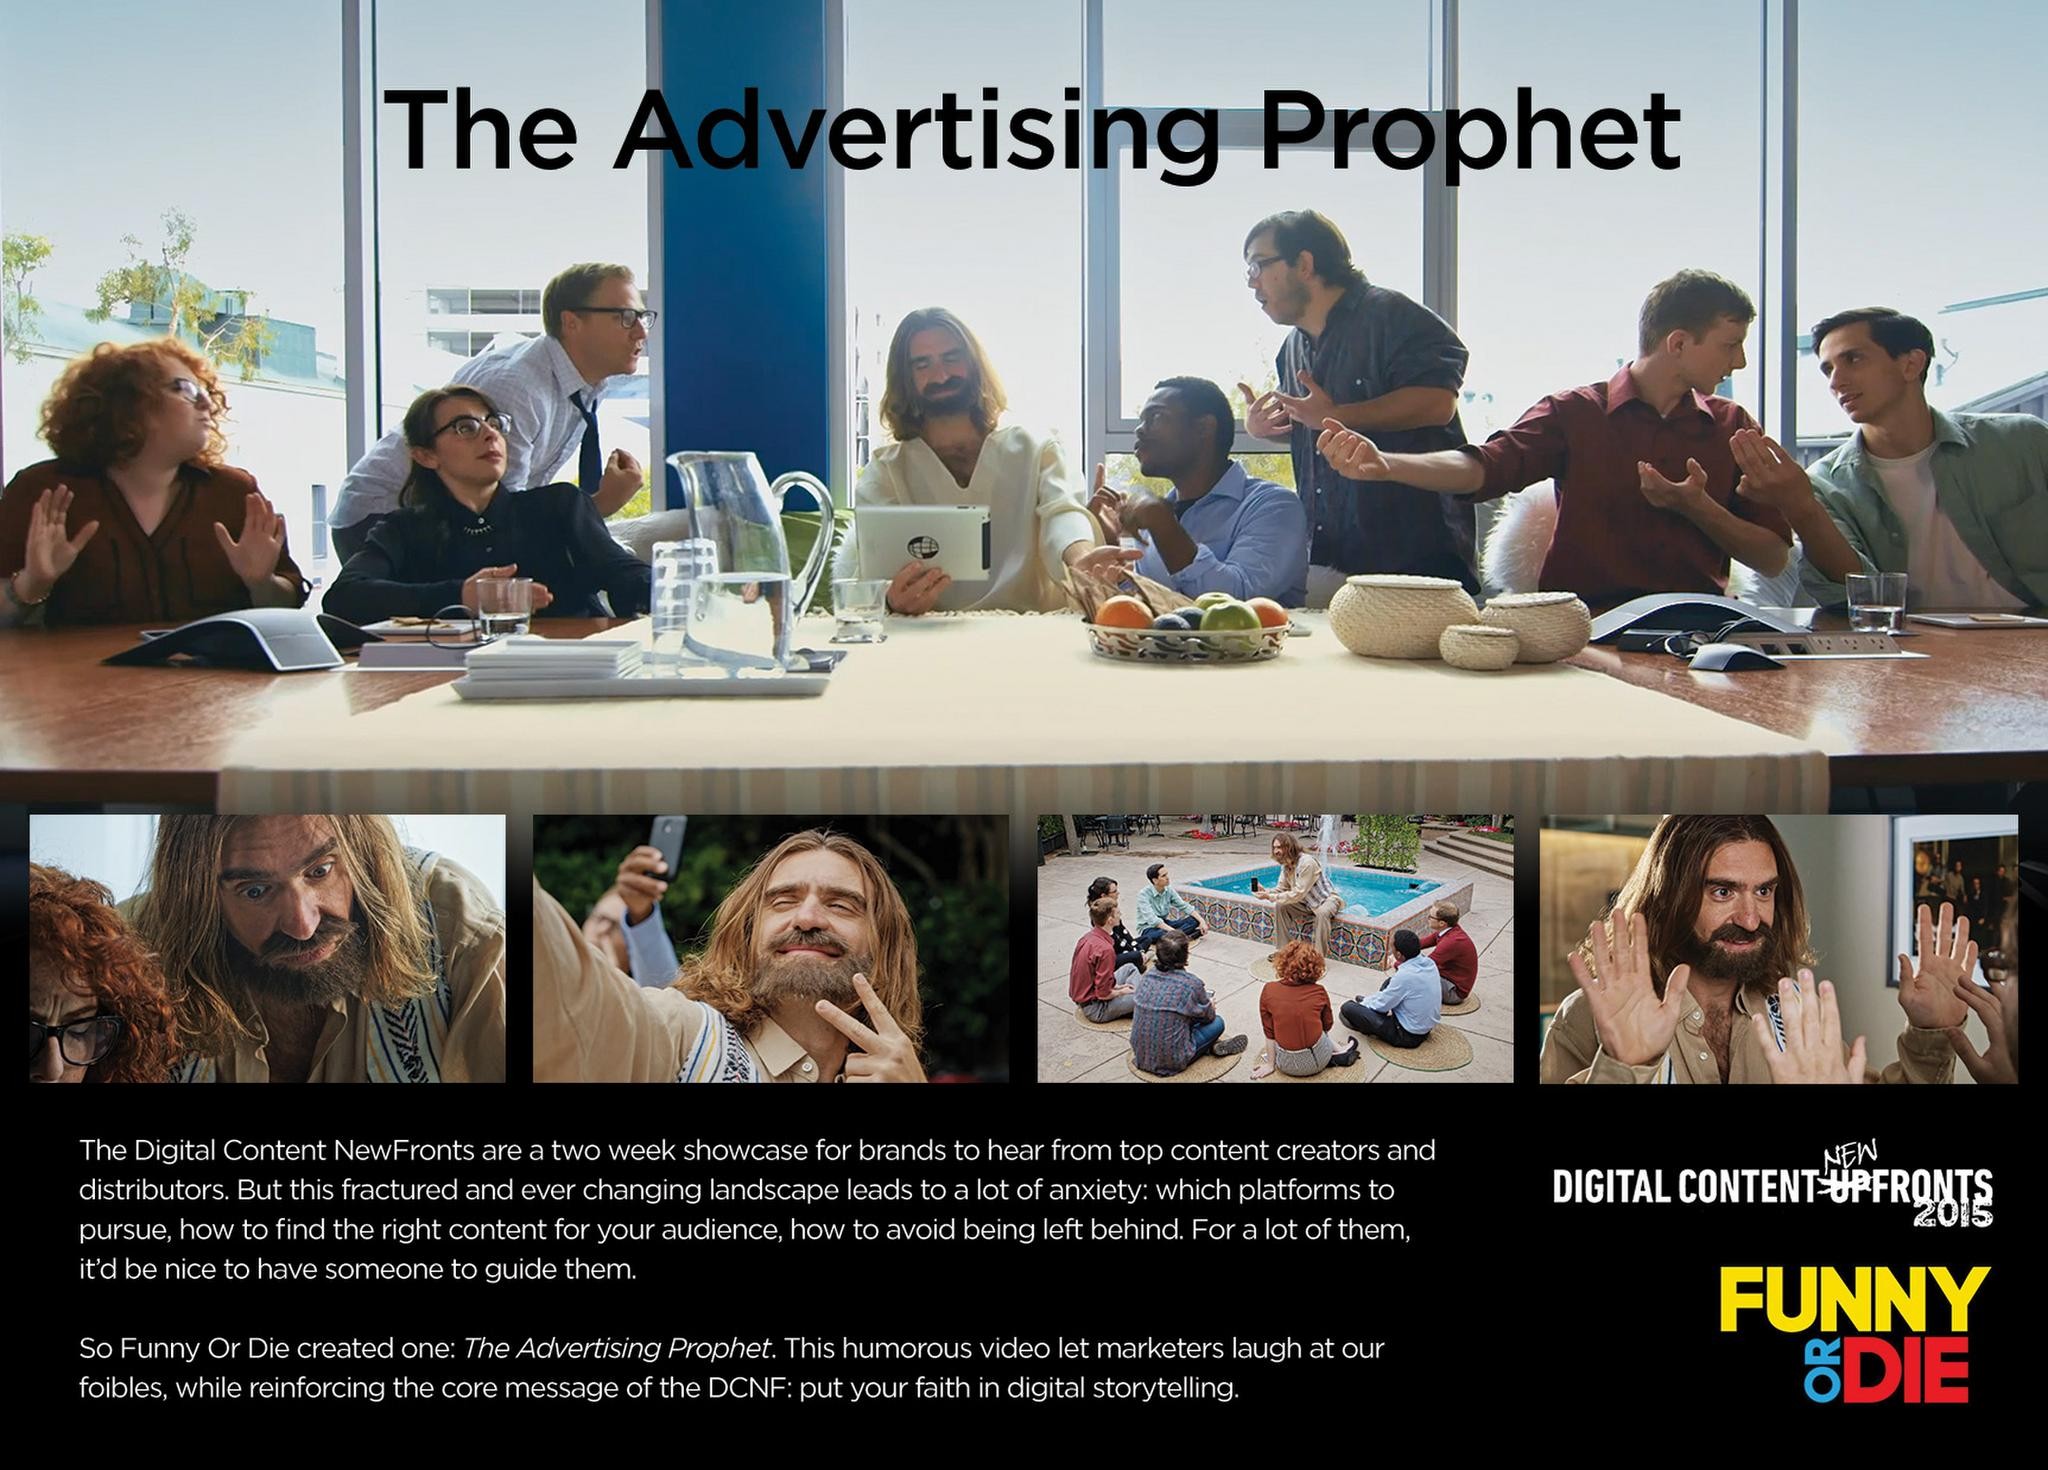 THE ADVERTISING PROPHET